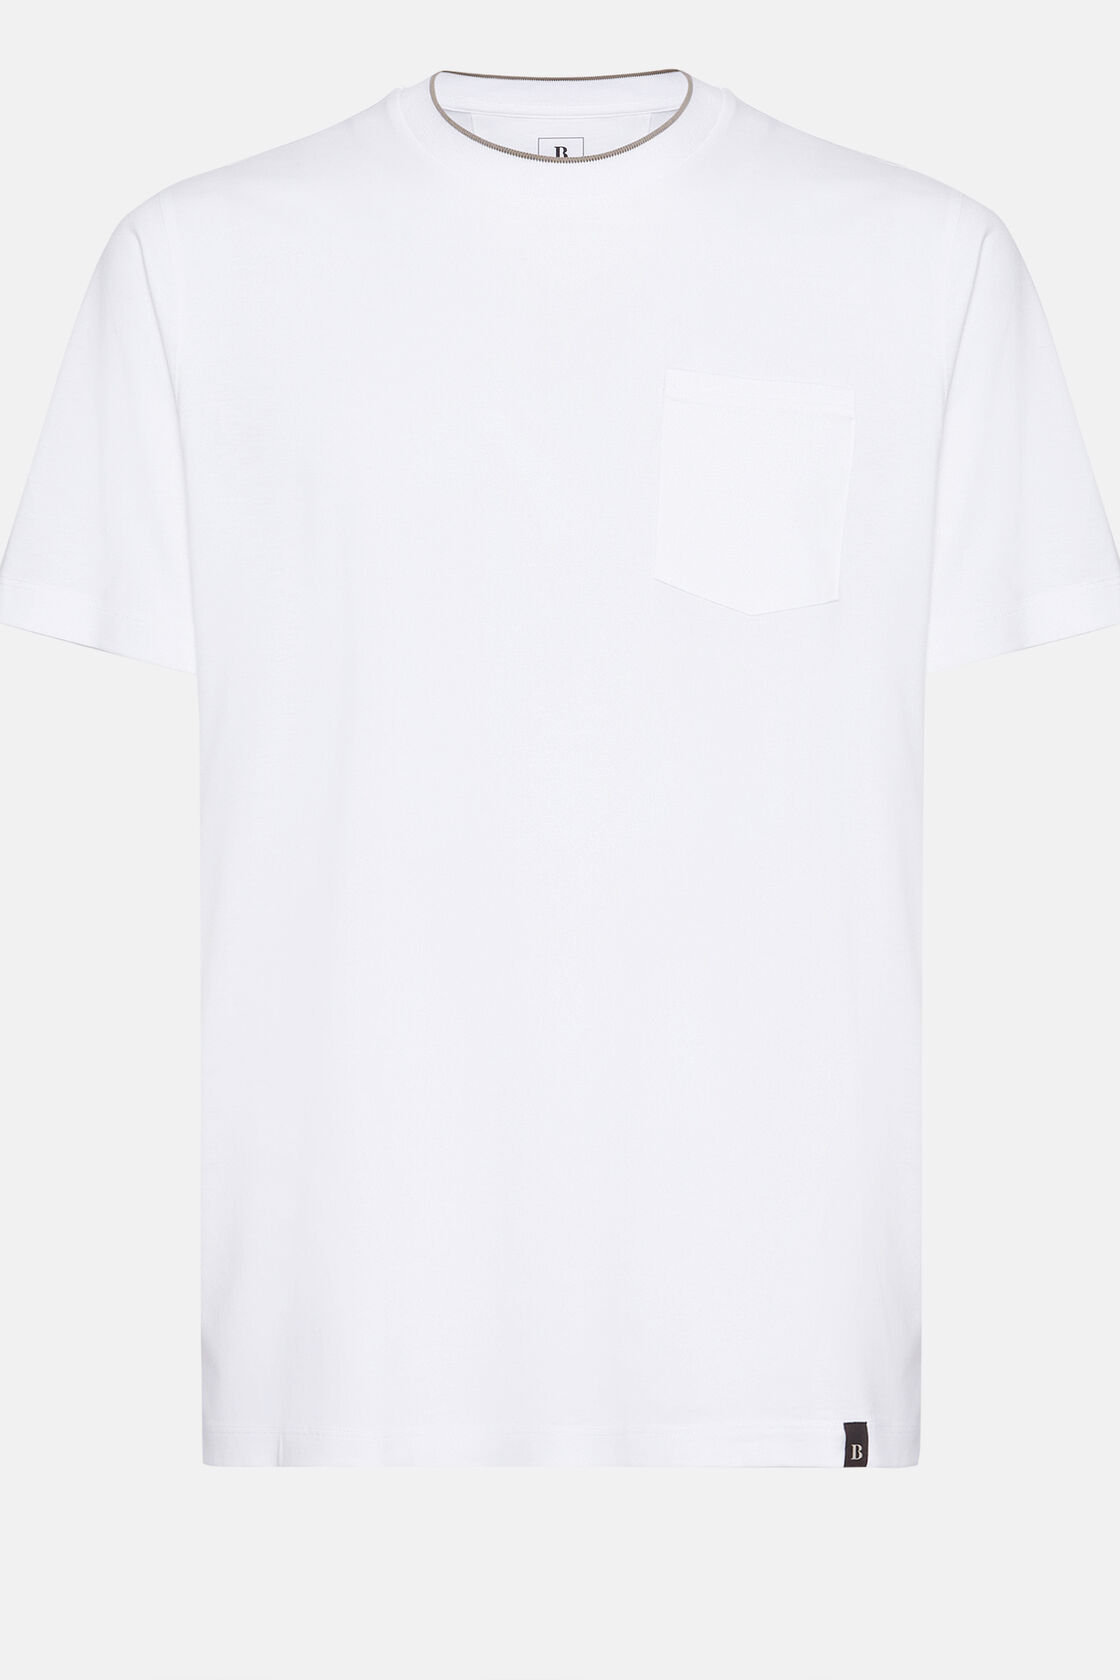 T-Shirt En Jersey De Coton Et Tencel, Blanc, hi-res